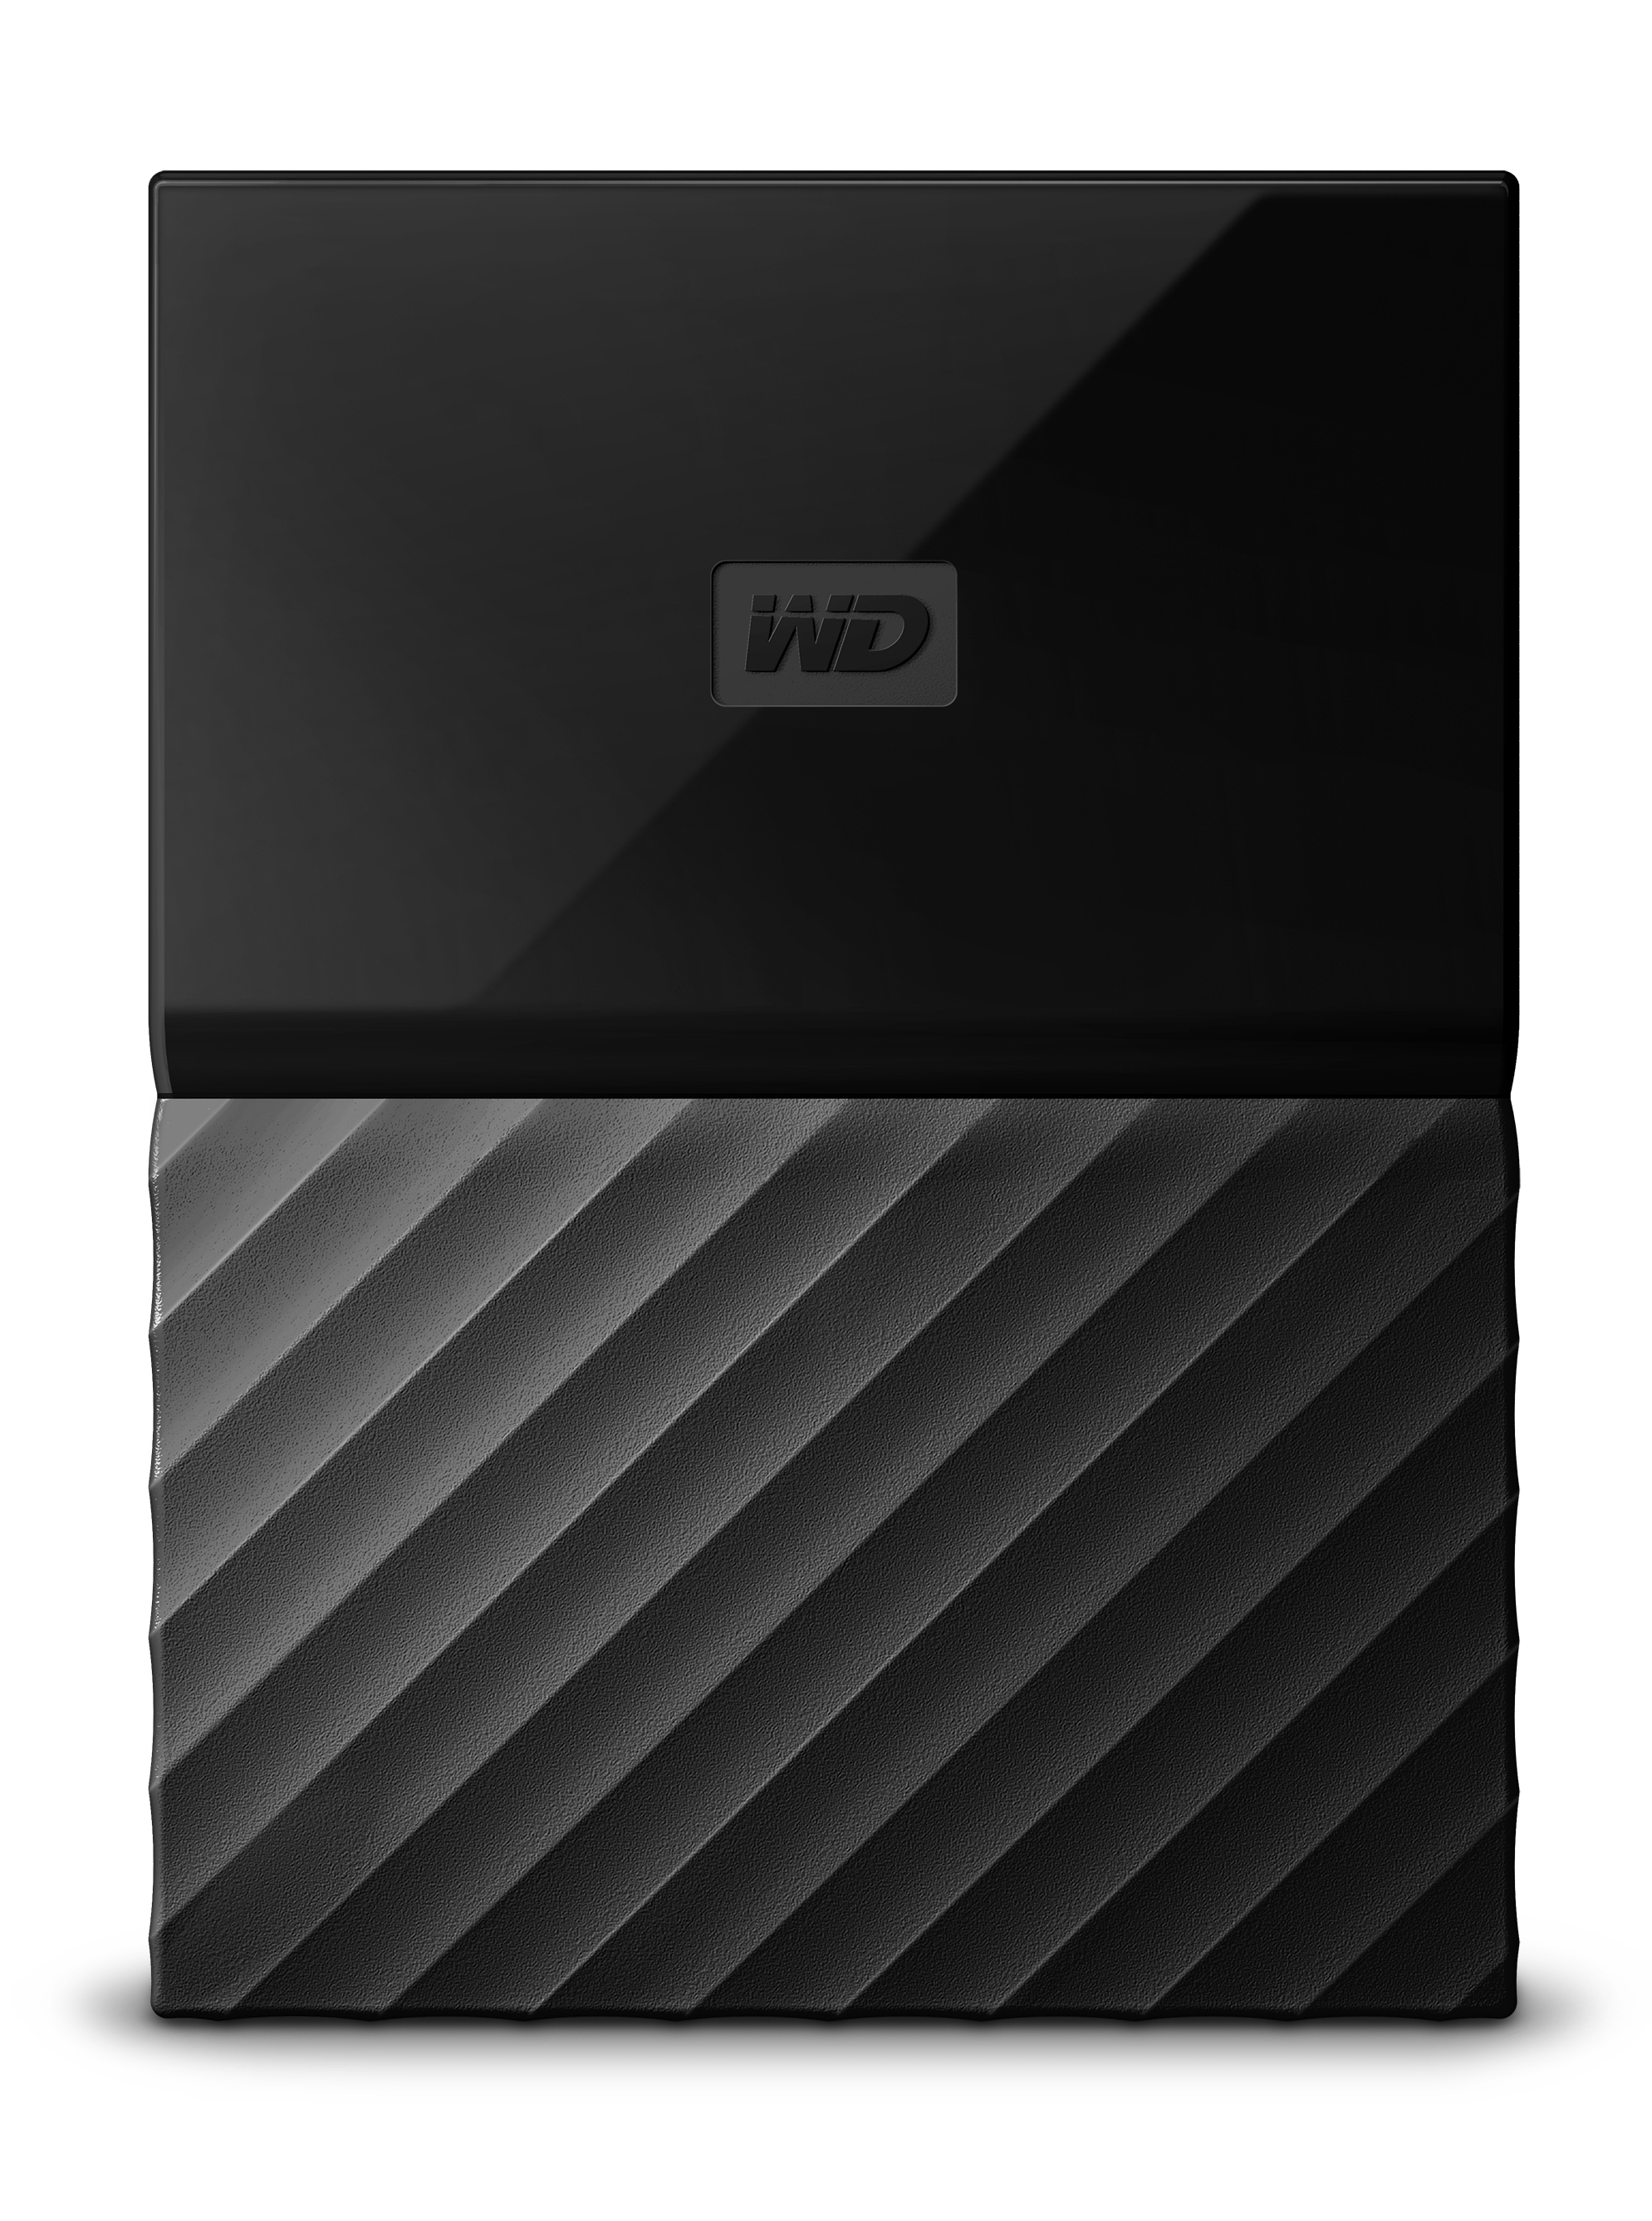 Western Digital My Passport 1TB Hard Drive Black for Mac